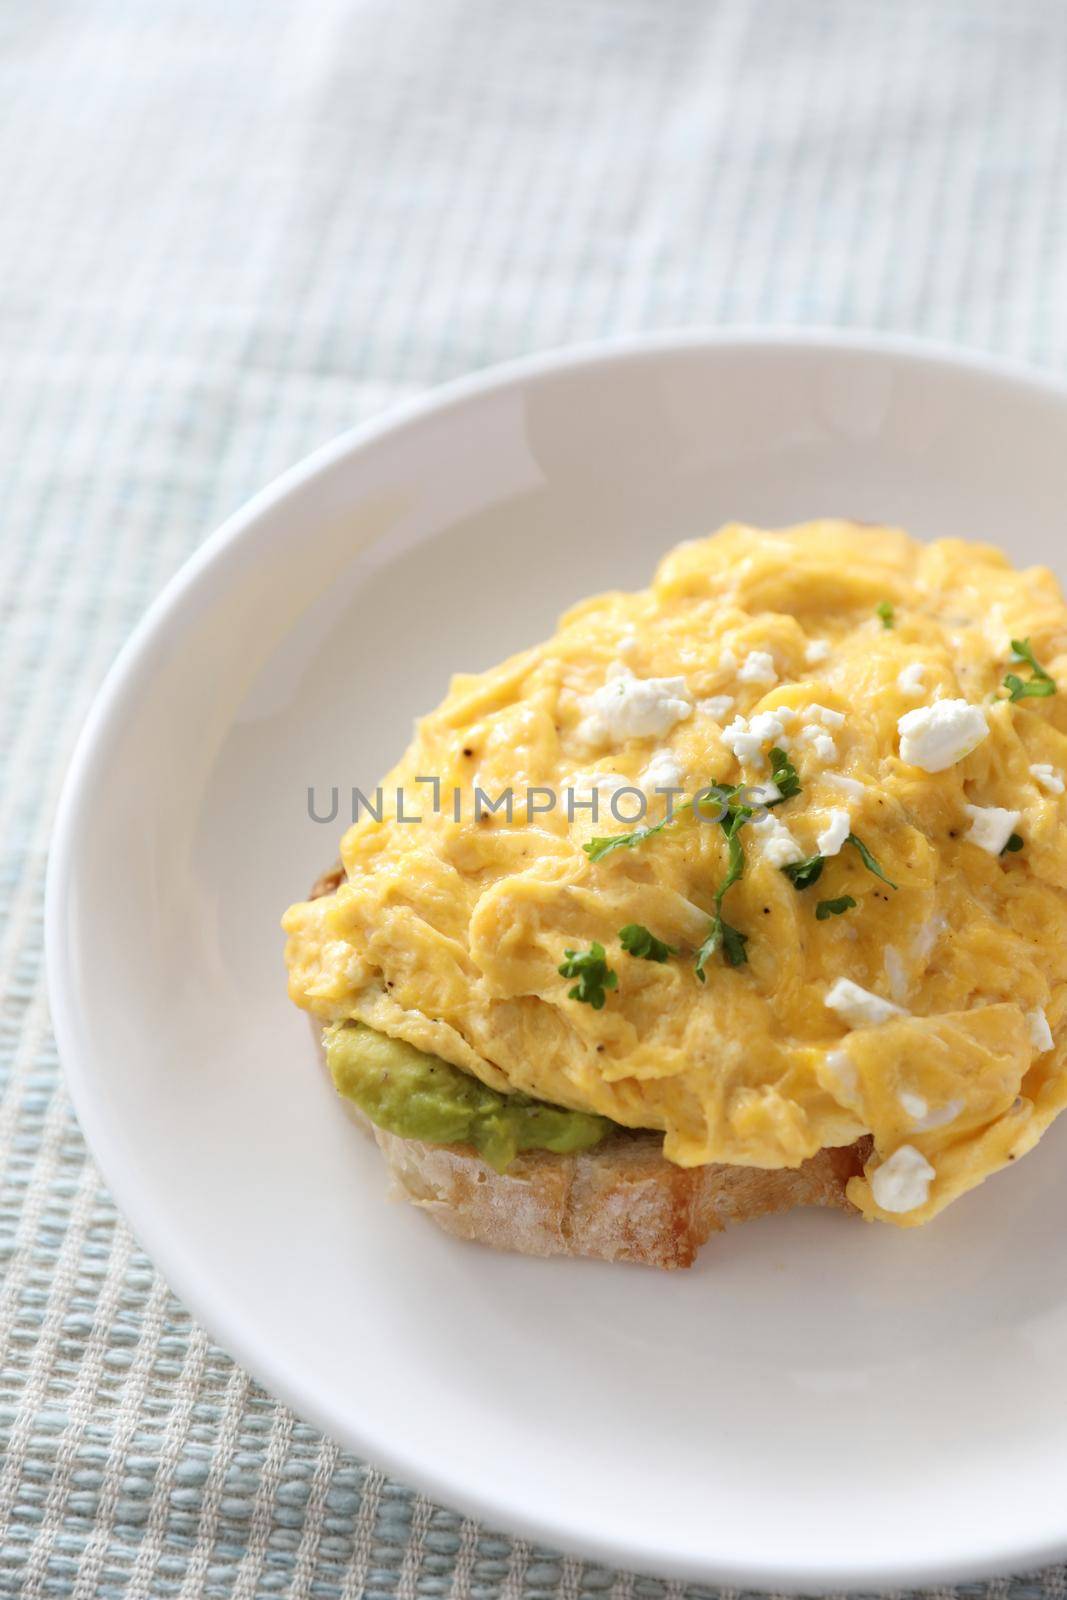 Avocado and scrambled eggs toast by piyato